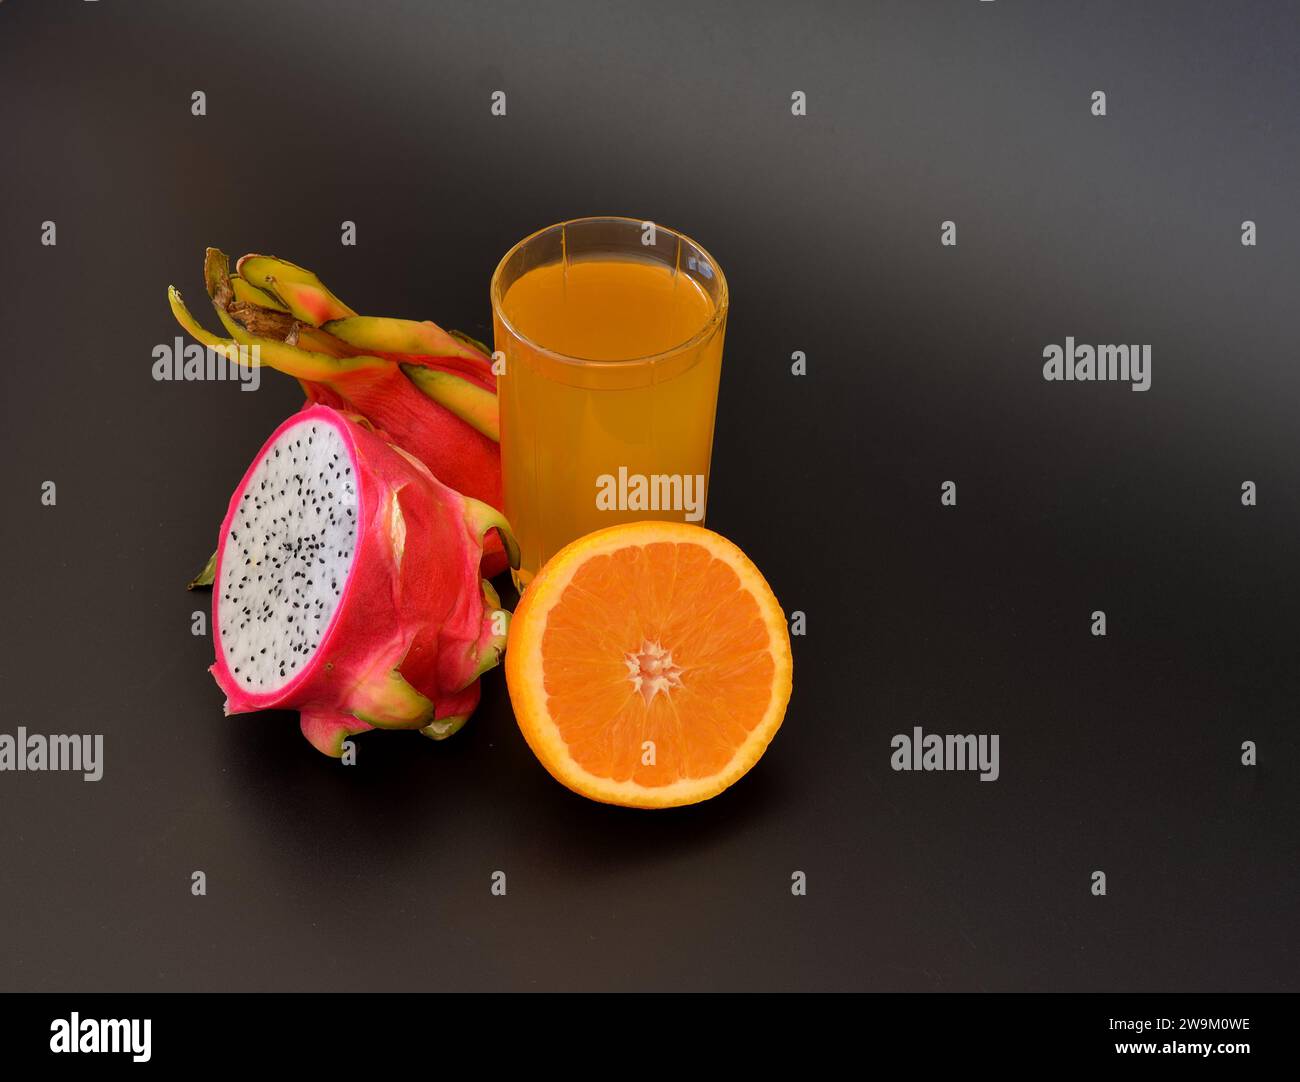 A tall glass of yellow fruit juice on a black background, next to ripe orange and pitaya fruits. Close-up. Stock Photo